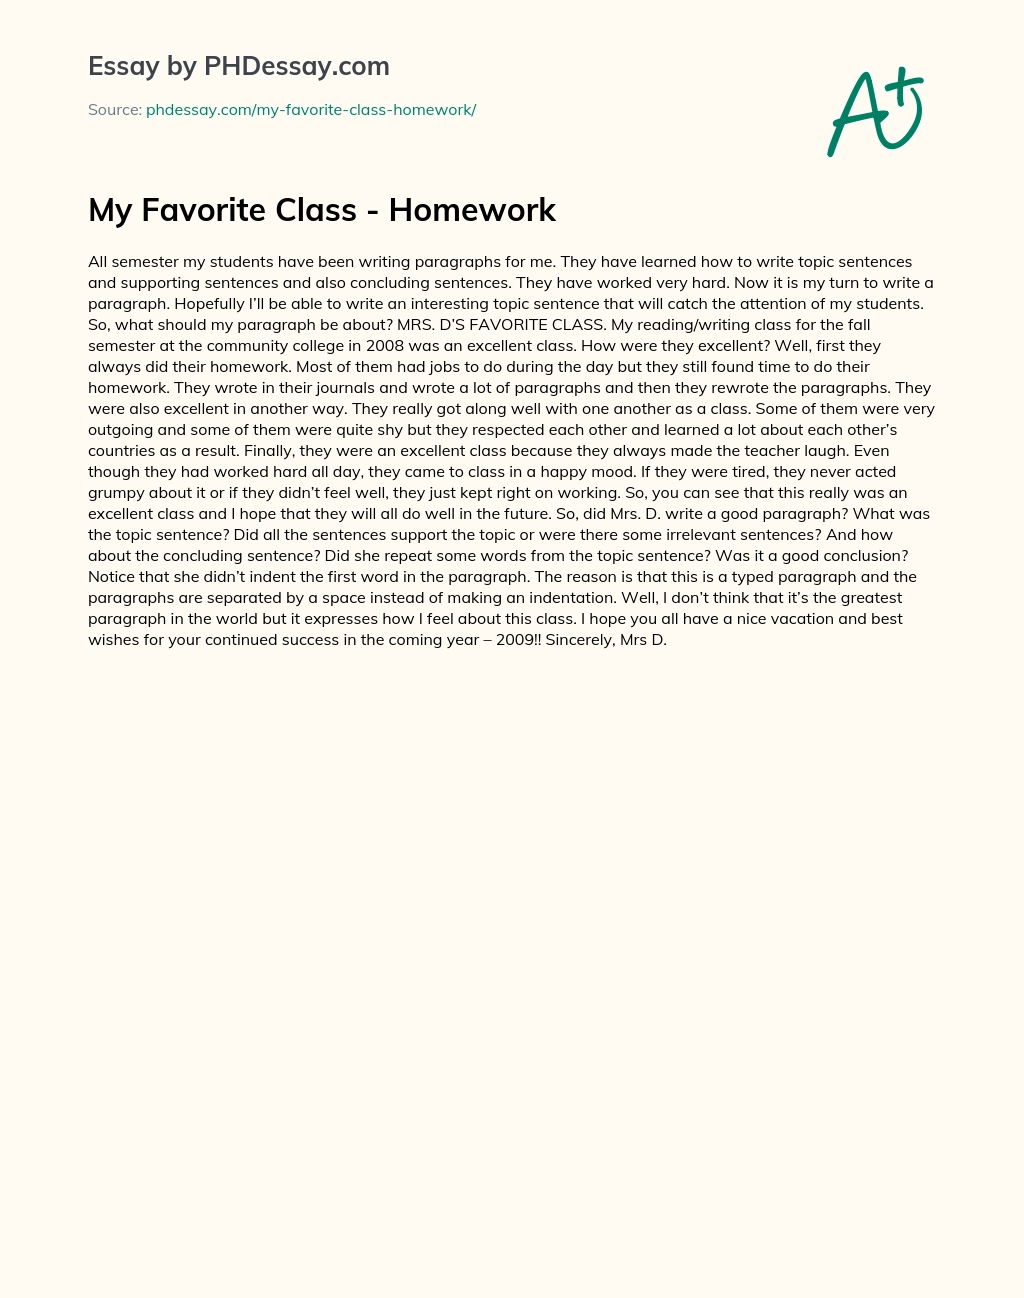 My Favorite Class – Homework essay